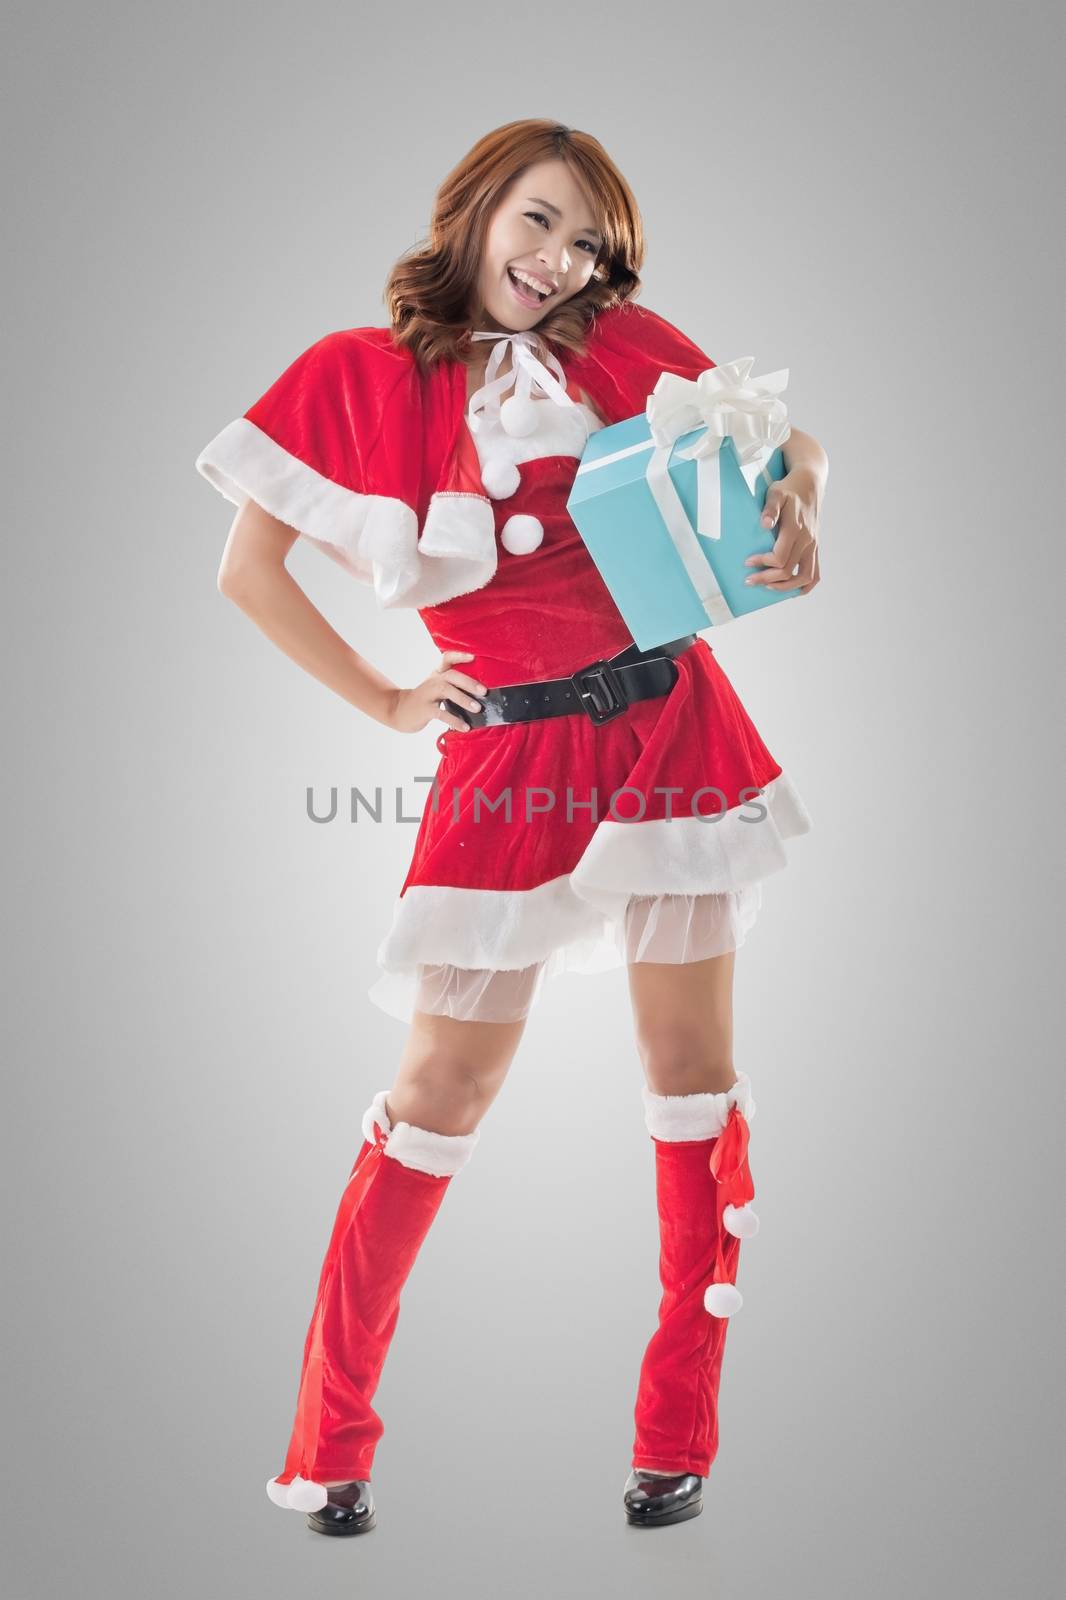 Smile happy Asian Christmas girl hold gift box, isolated full length portrait.